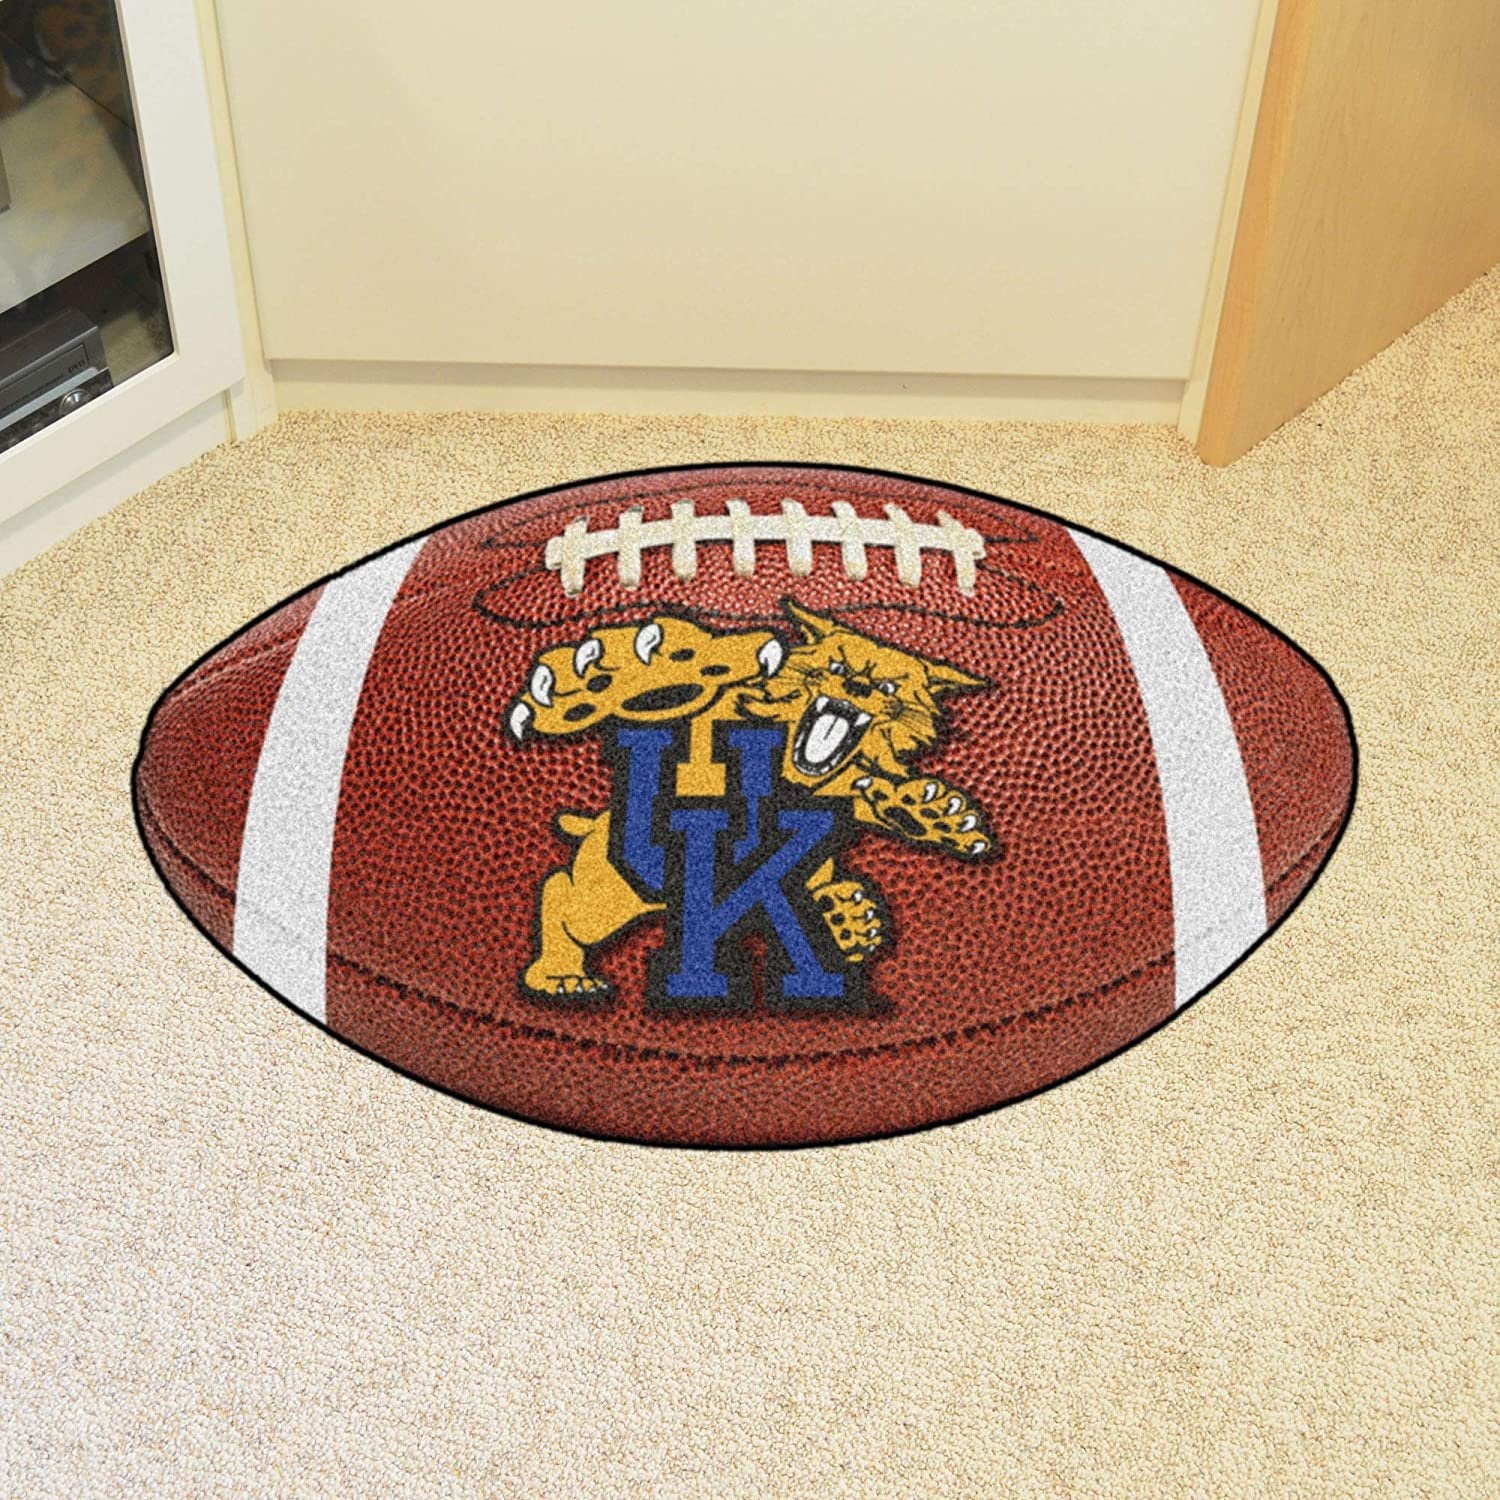 University of Kentucky Wildcats Floor Mat Area Rug, 20x32 Inch, Non-Skid Backing, Football Design